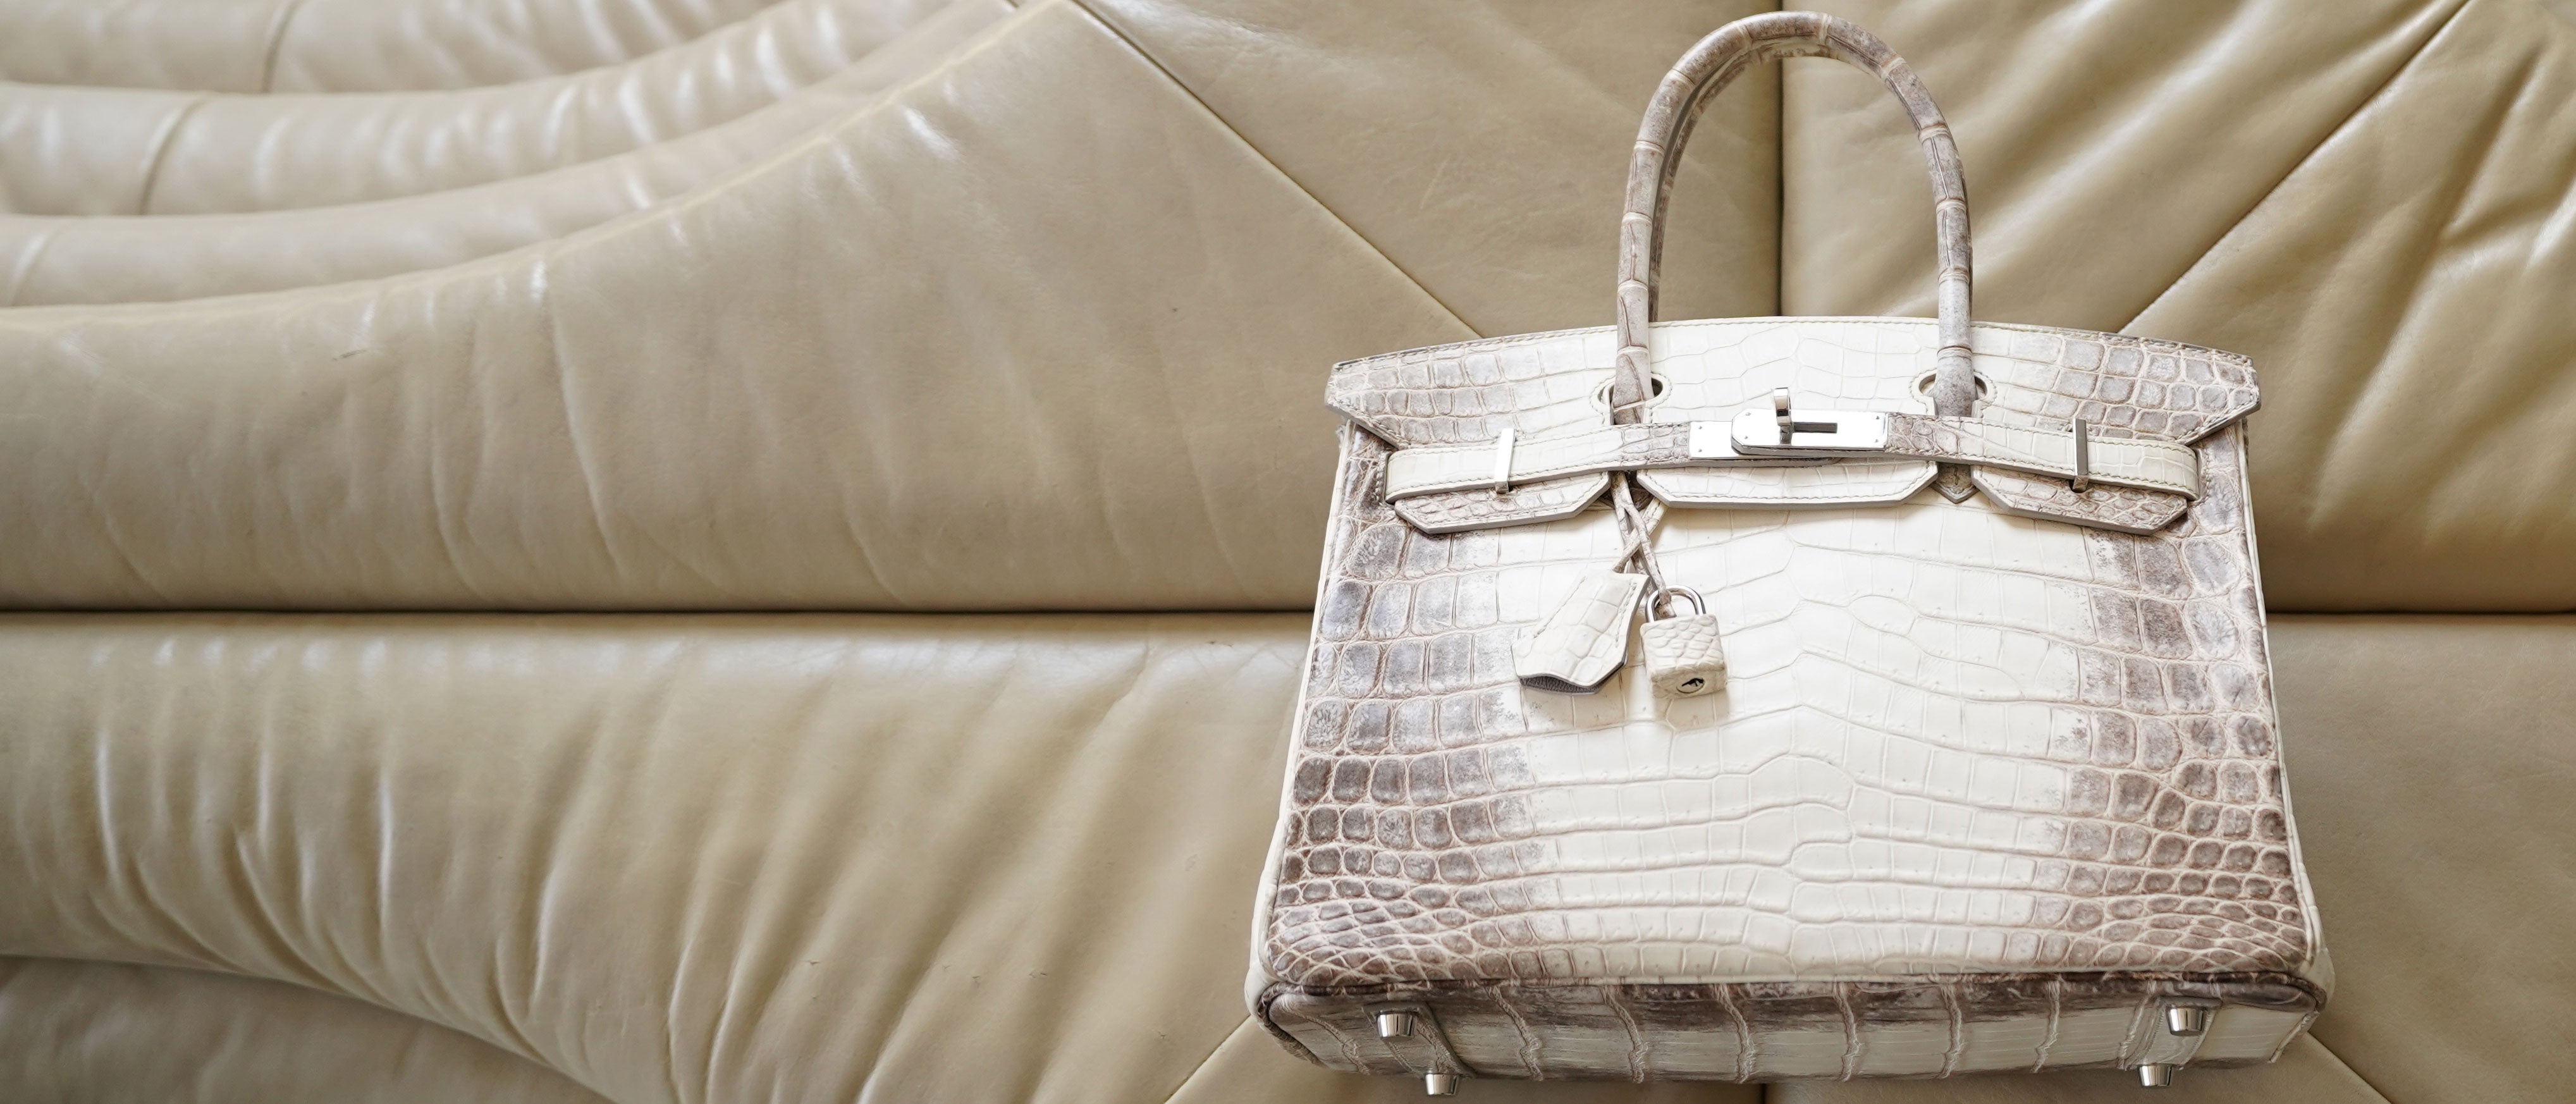 Pink Hermes Crocodile Leather Berkin Bag Specifications: High